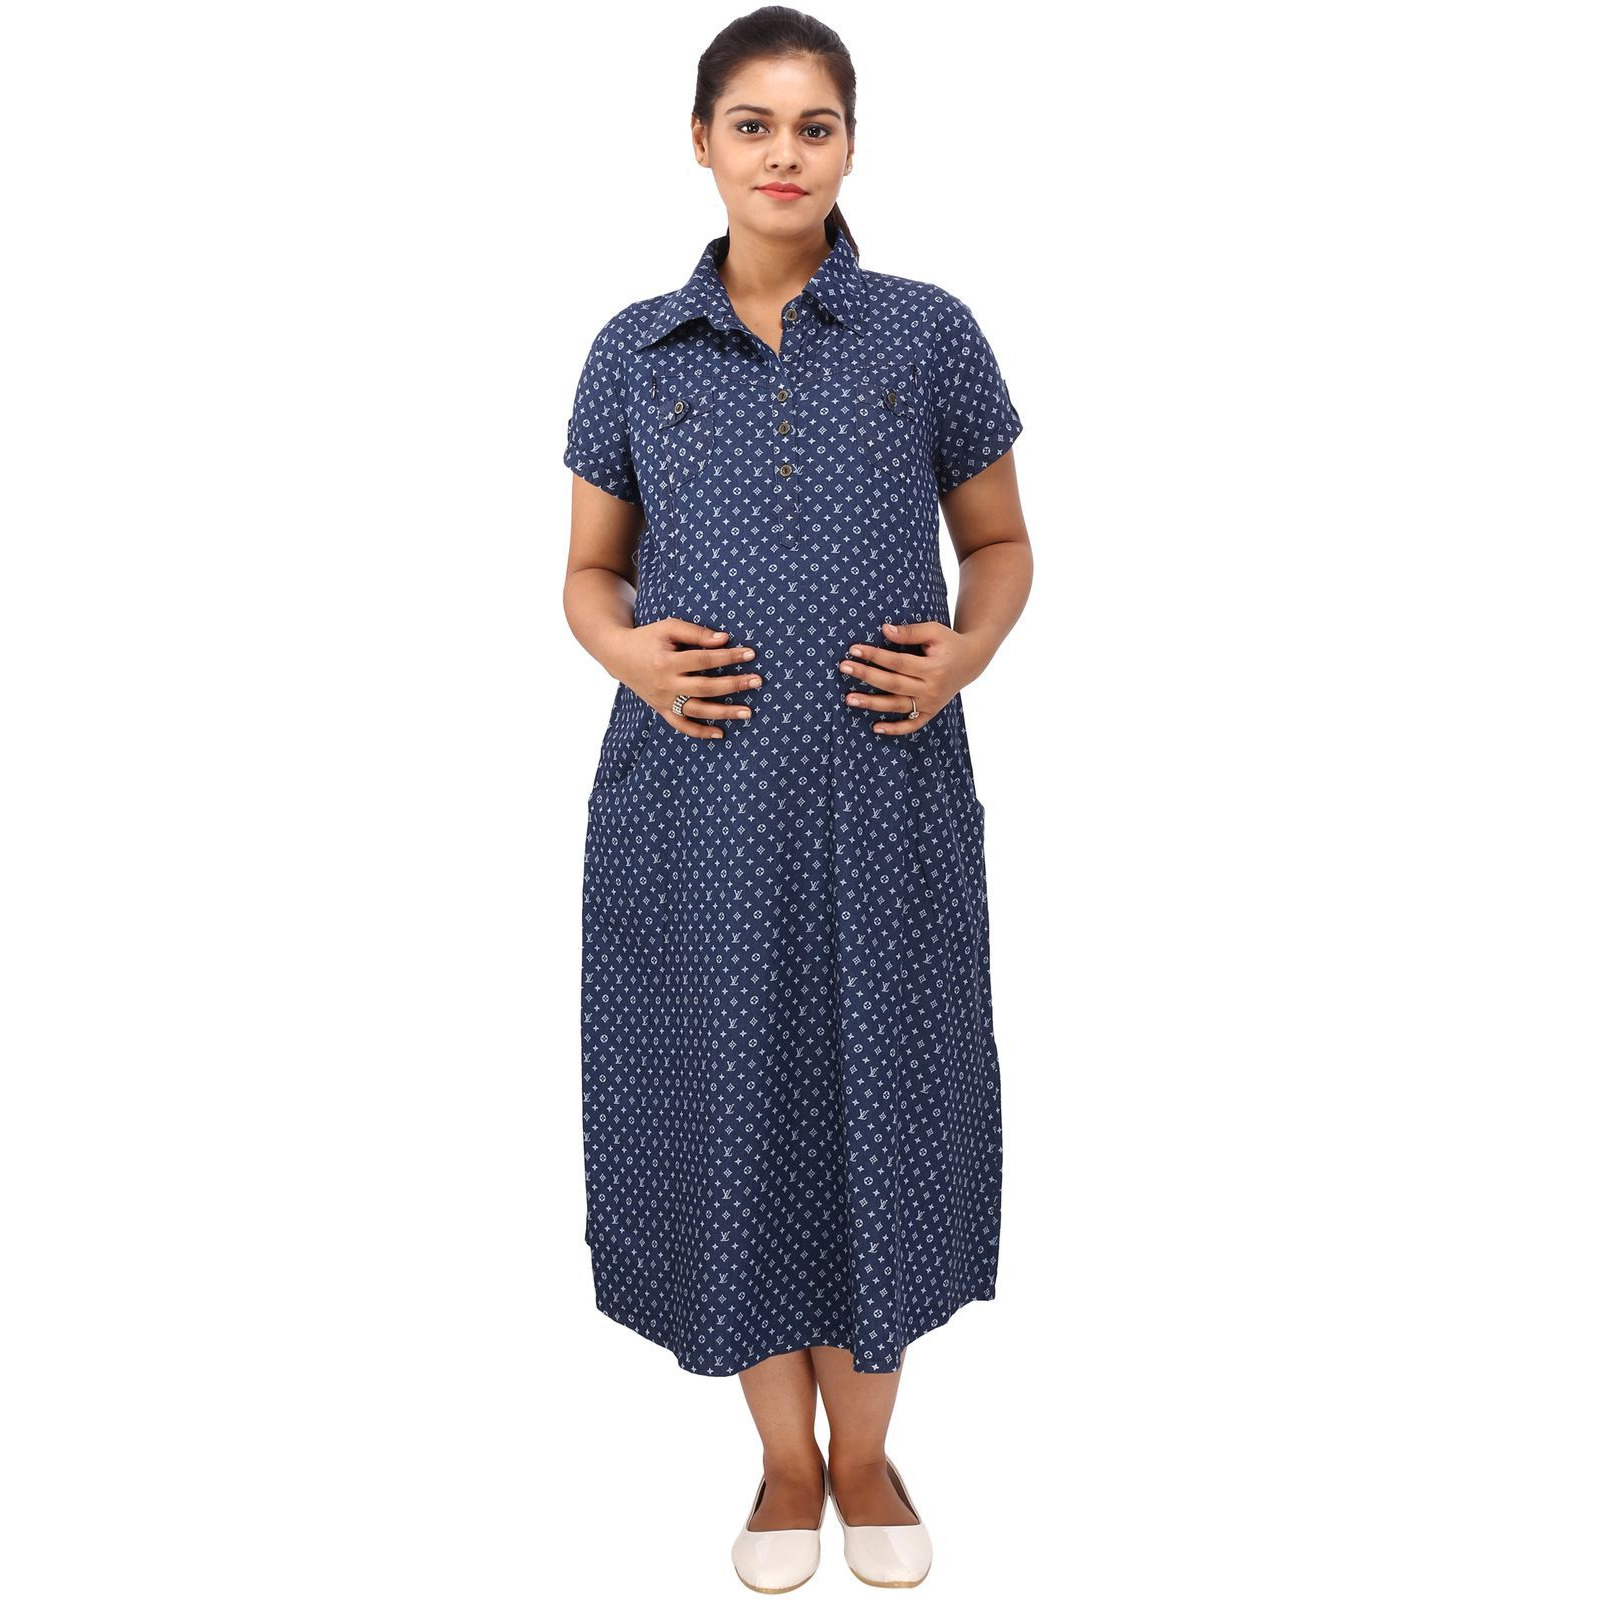 Mamma's Maternity Women's VL Printed Blue Denim Maternity Dress